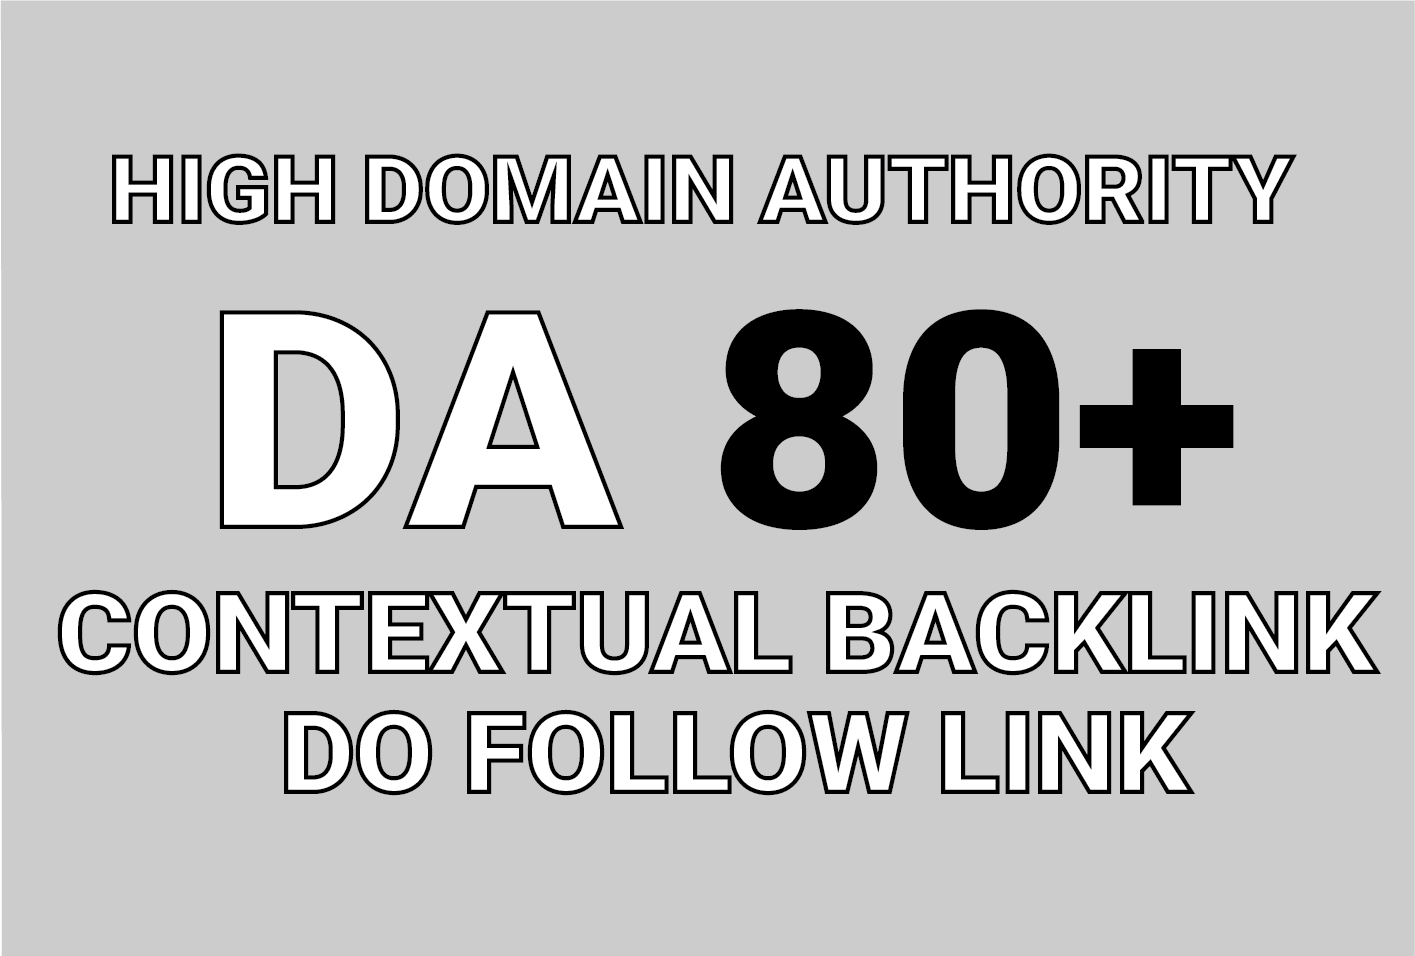 build 30 white hat contextual backlinks on domain authority da 80 link building